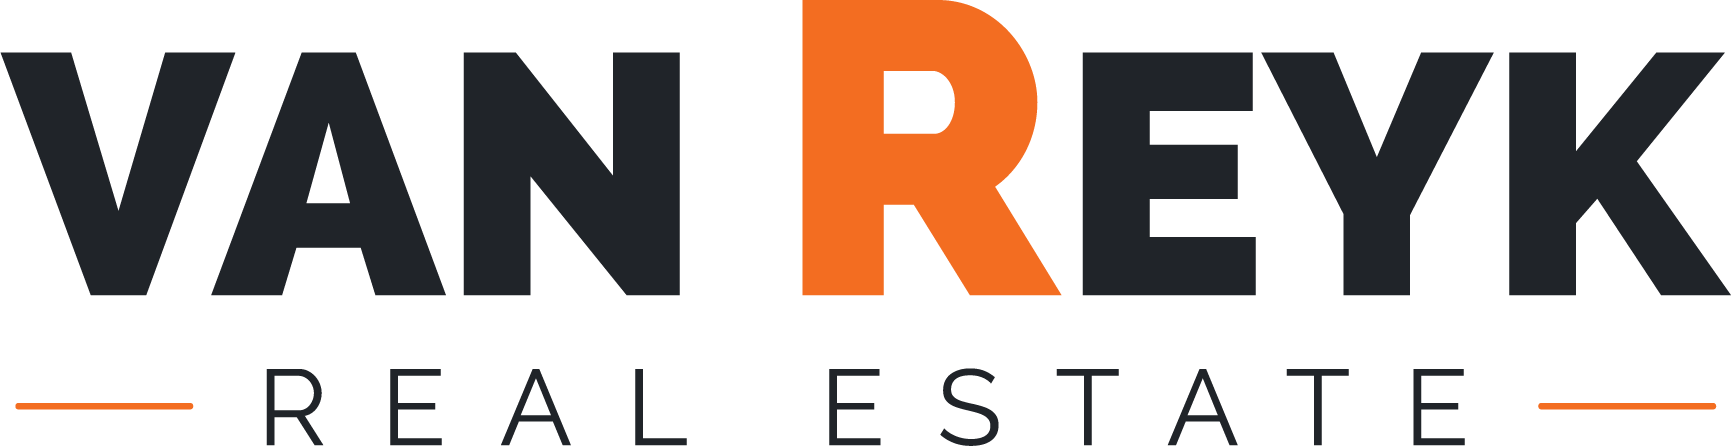 VAN REYK REAL ESTATE BAIRNSDALE - logo